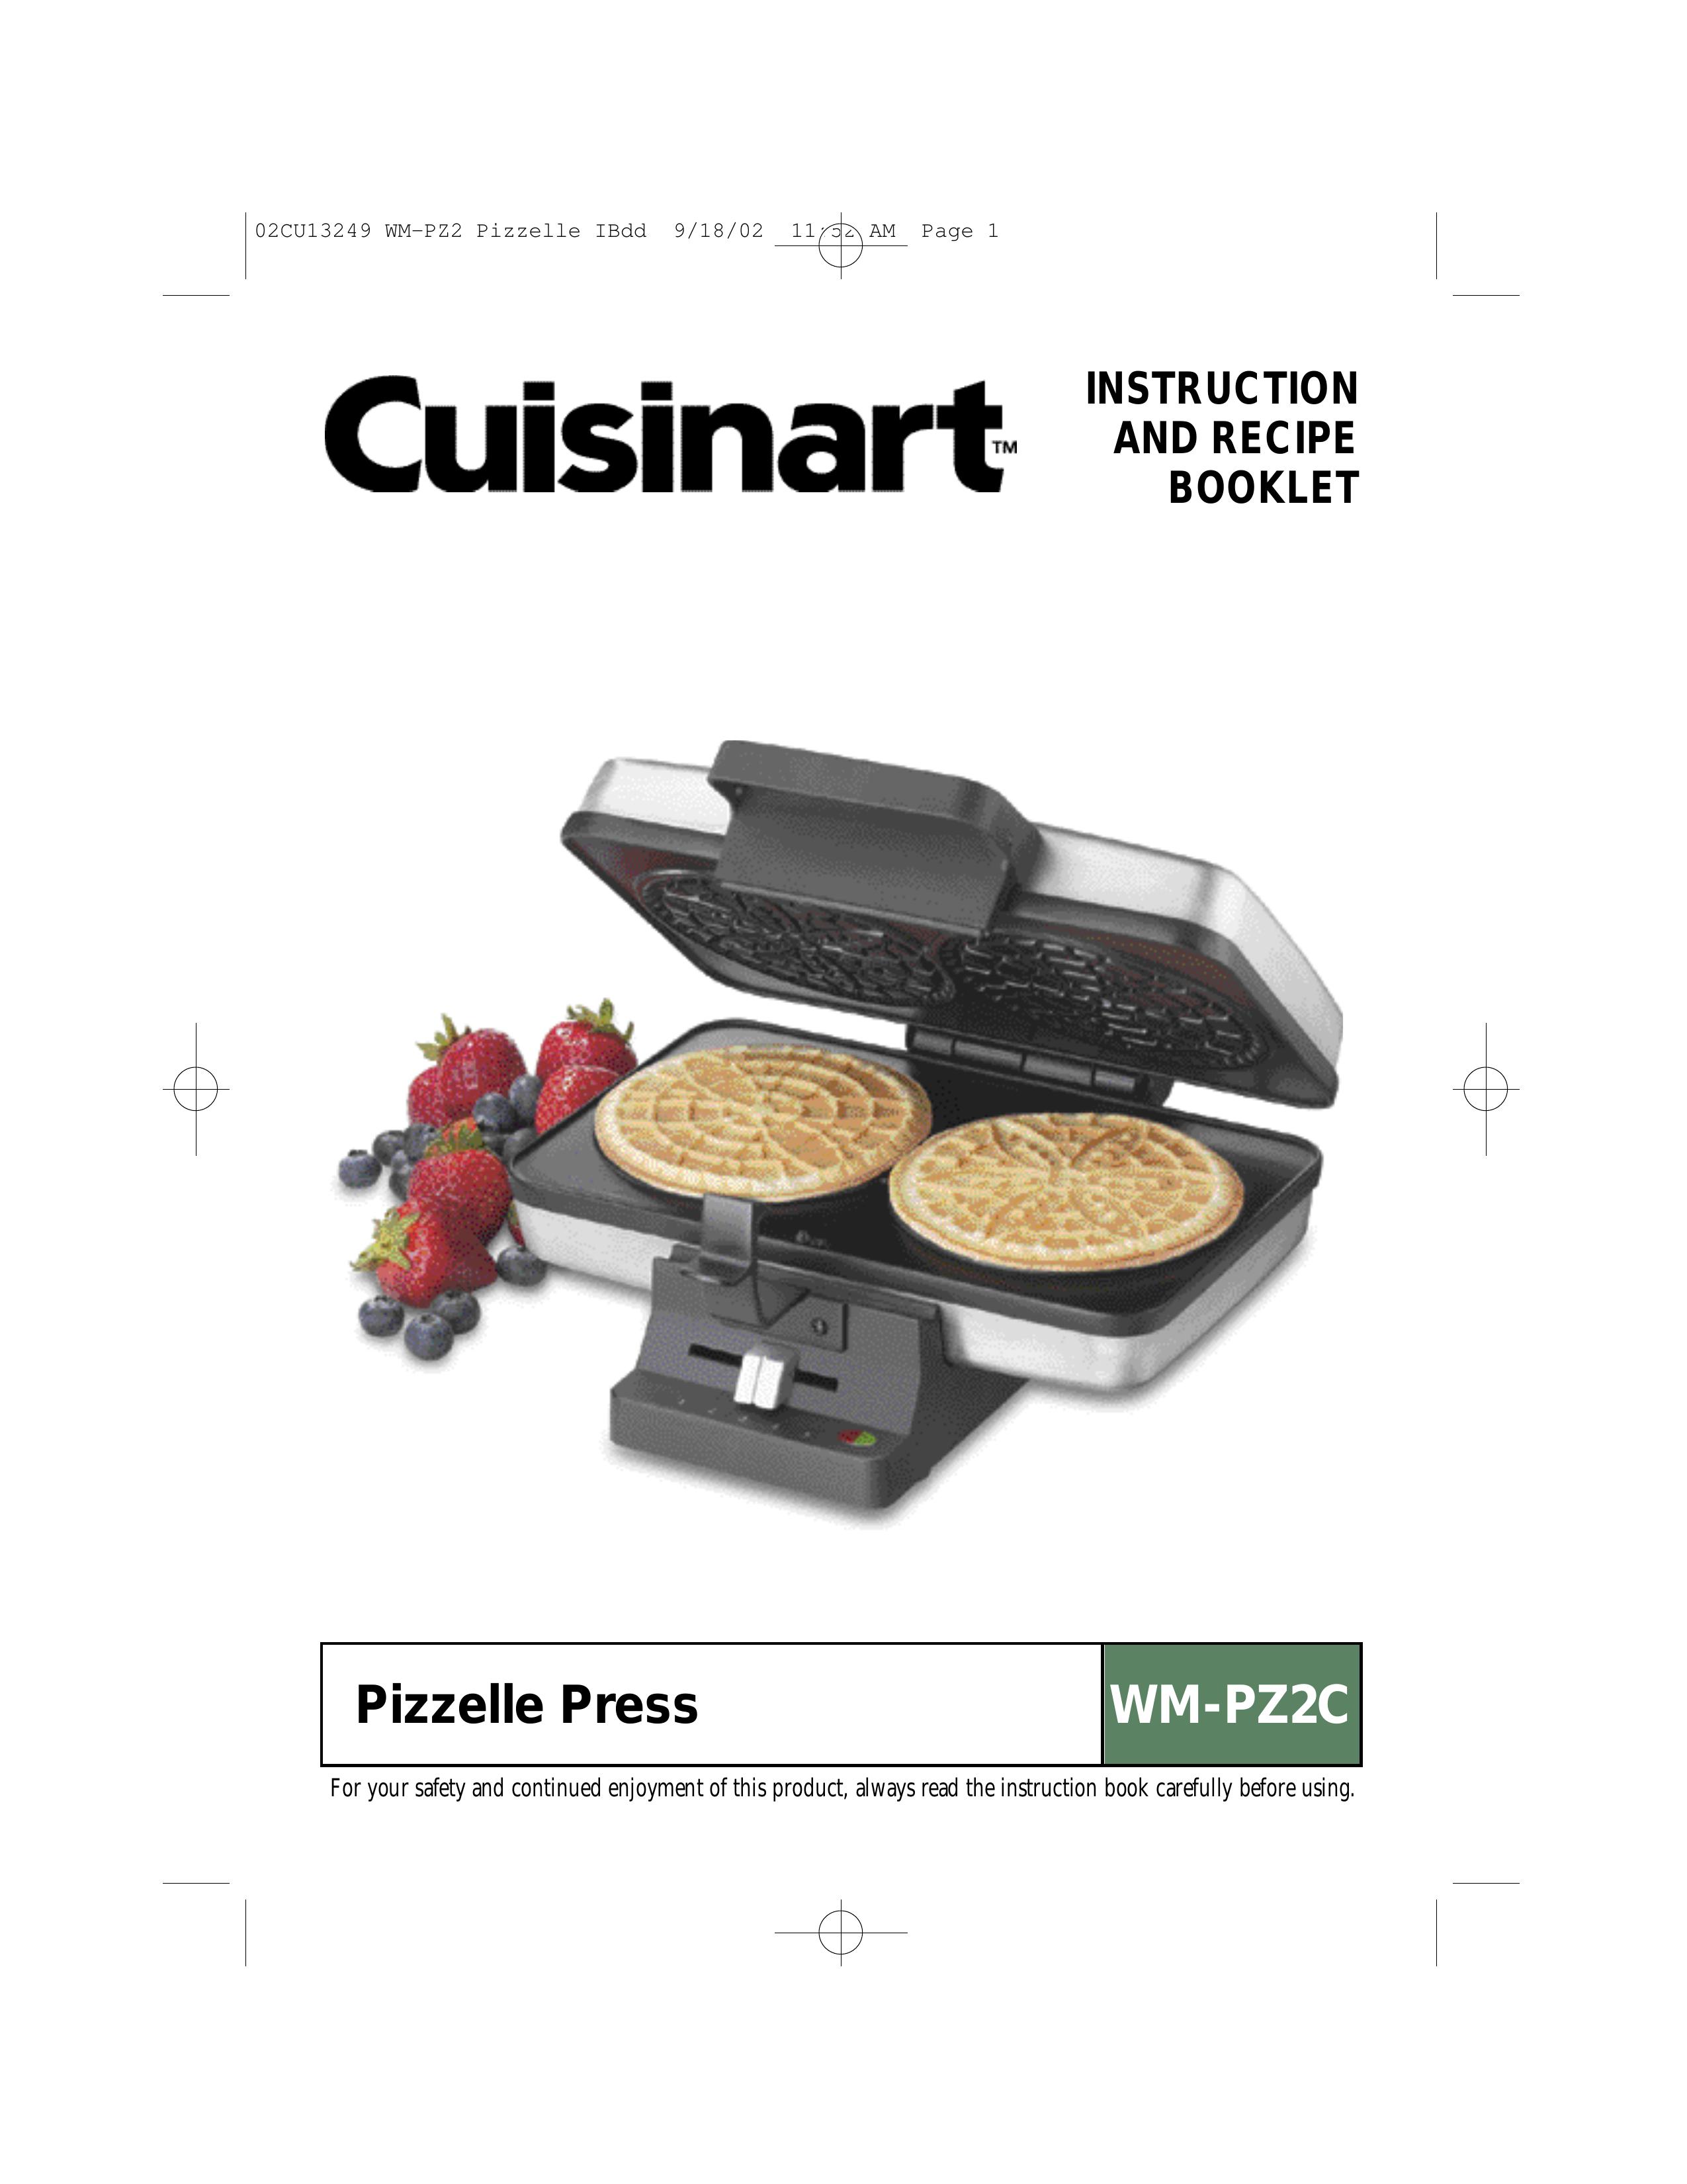 Cuisinart WM-PZ2 Waffle Iron User Manual